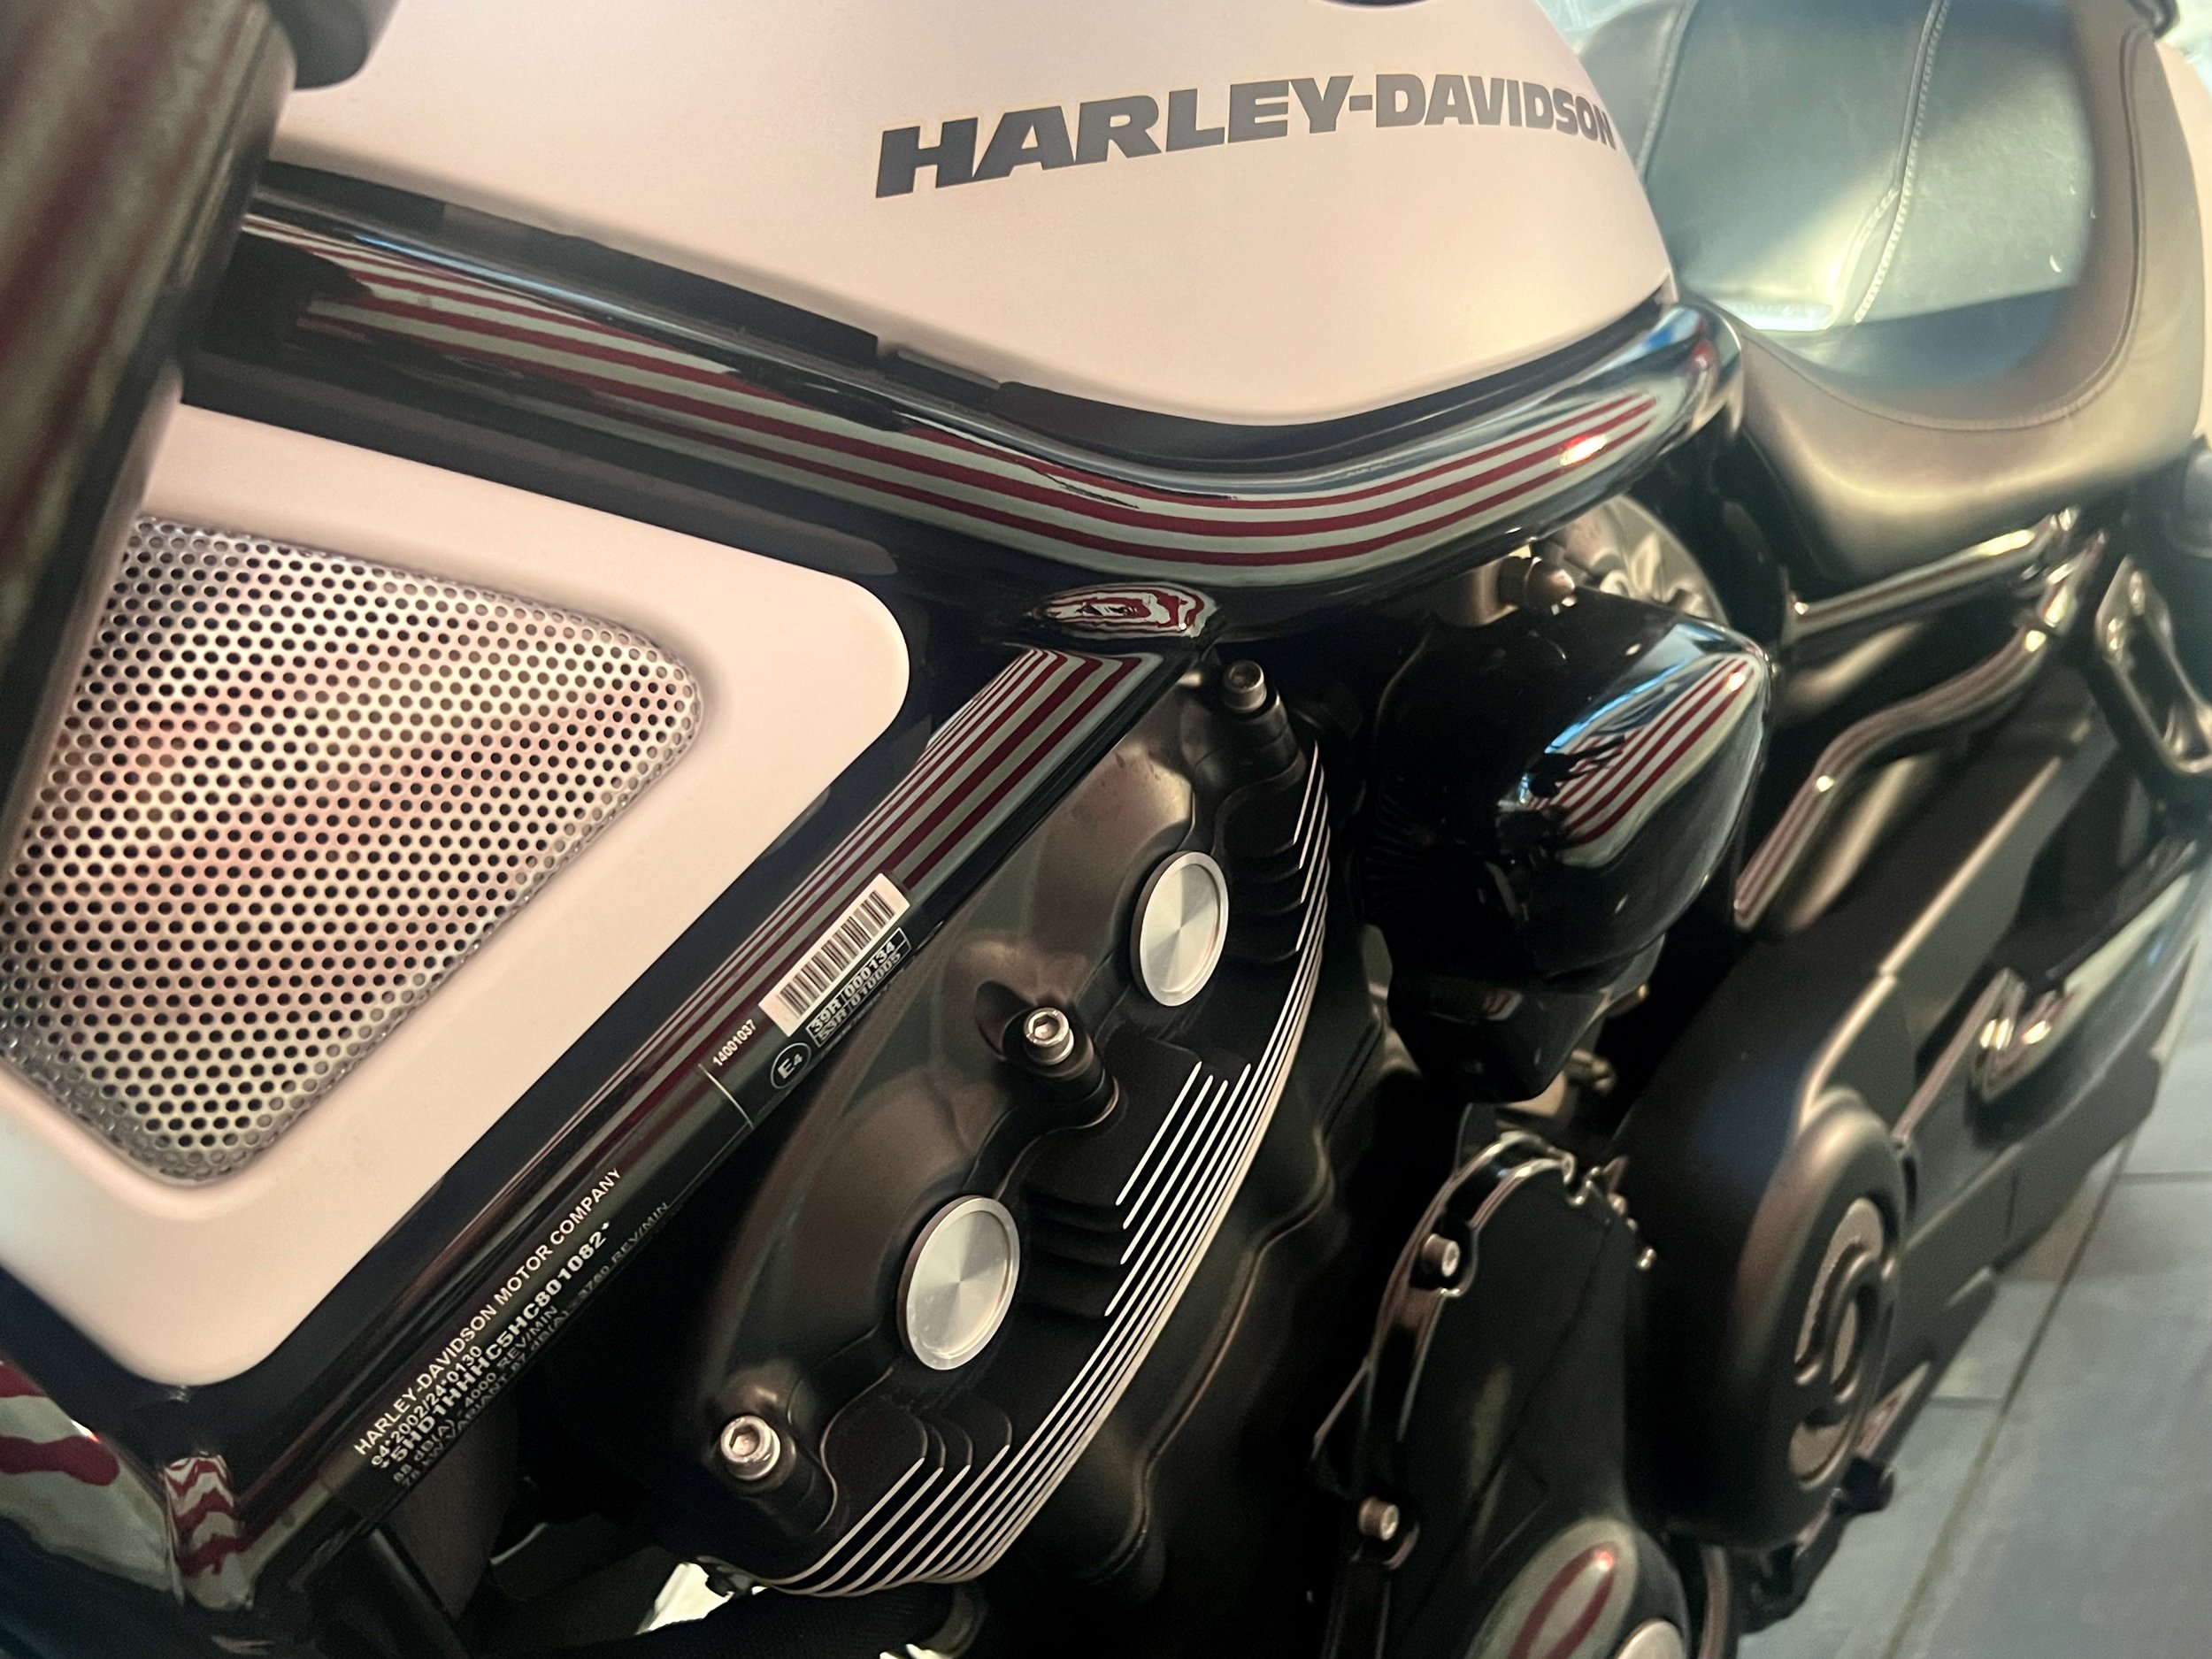 09 2016 Harley Davidson V-Rod Muscle Salt Lake Matt White.jpeg